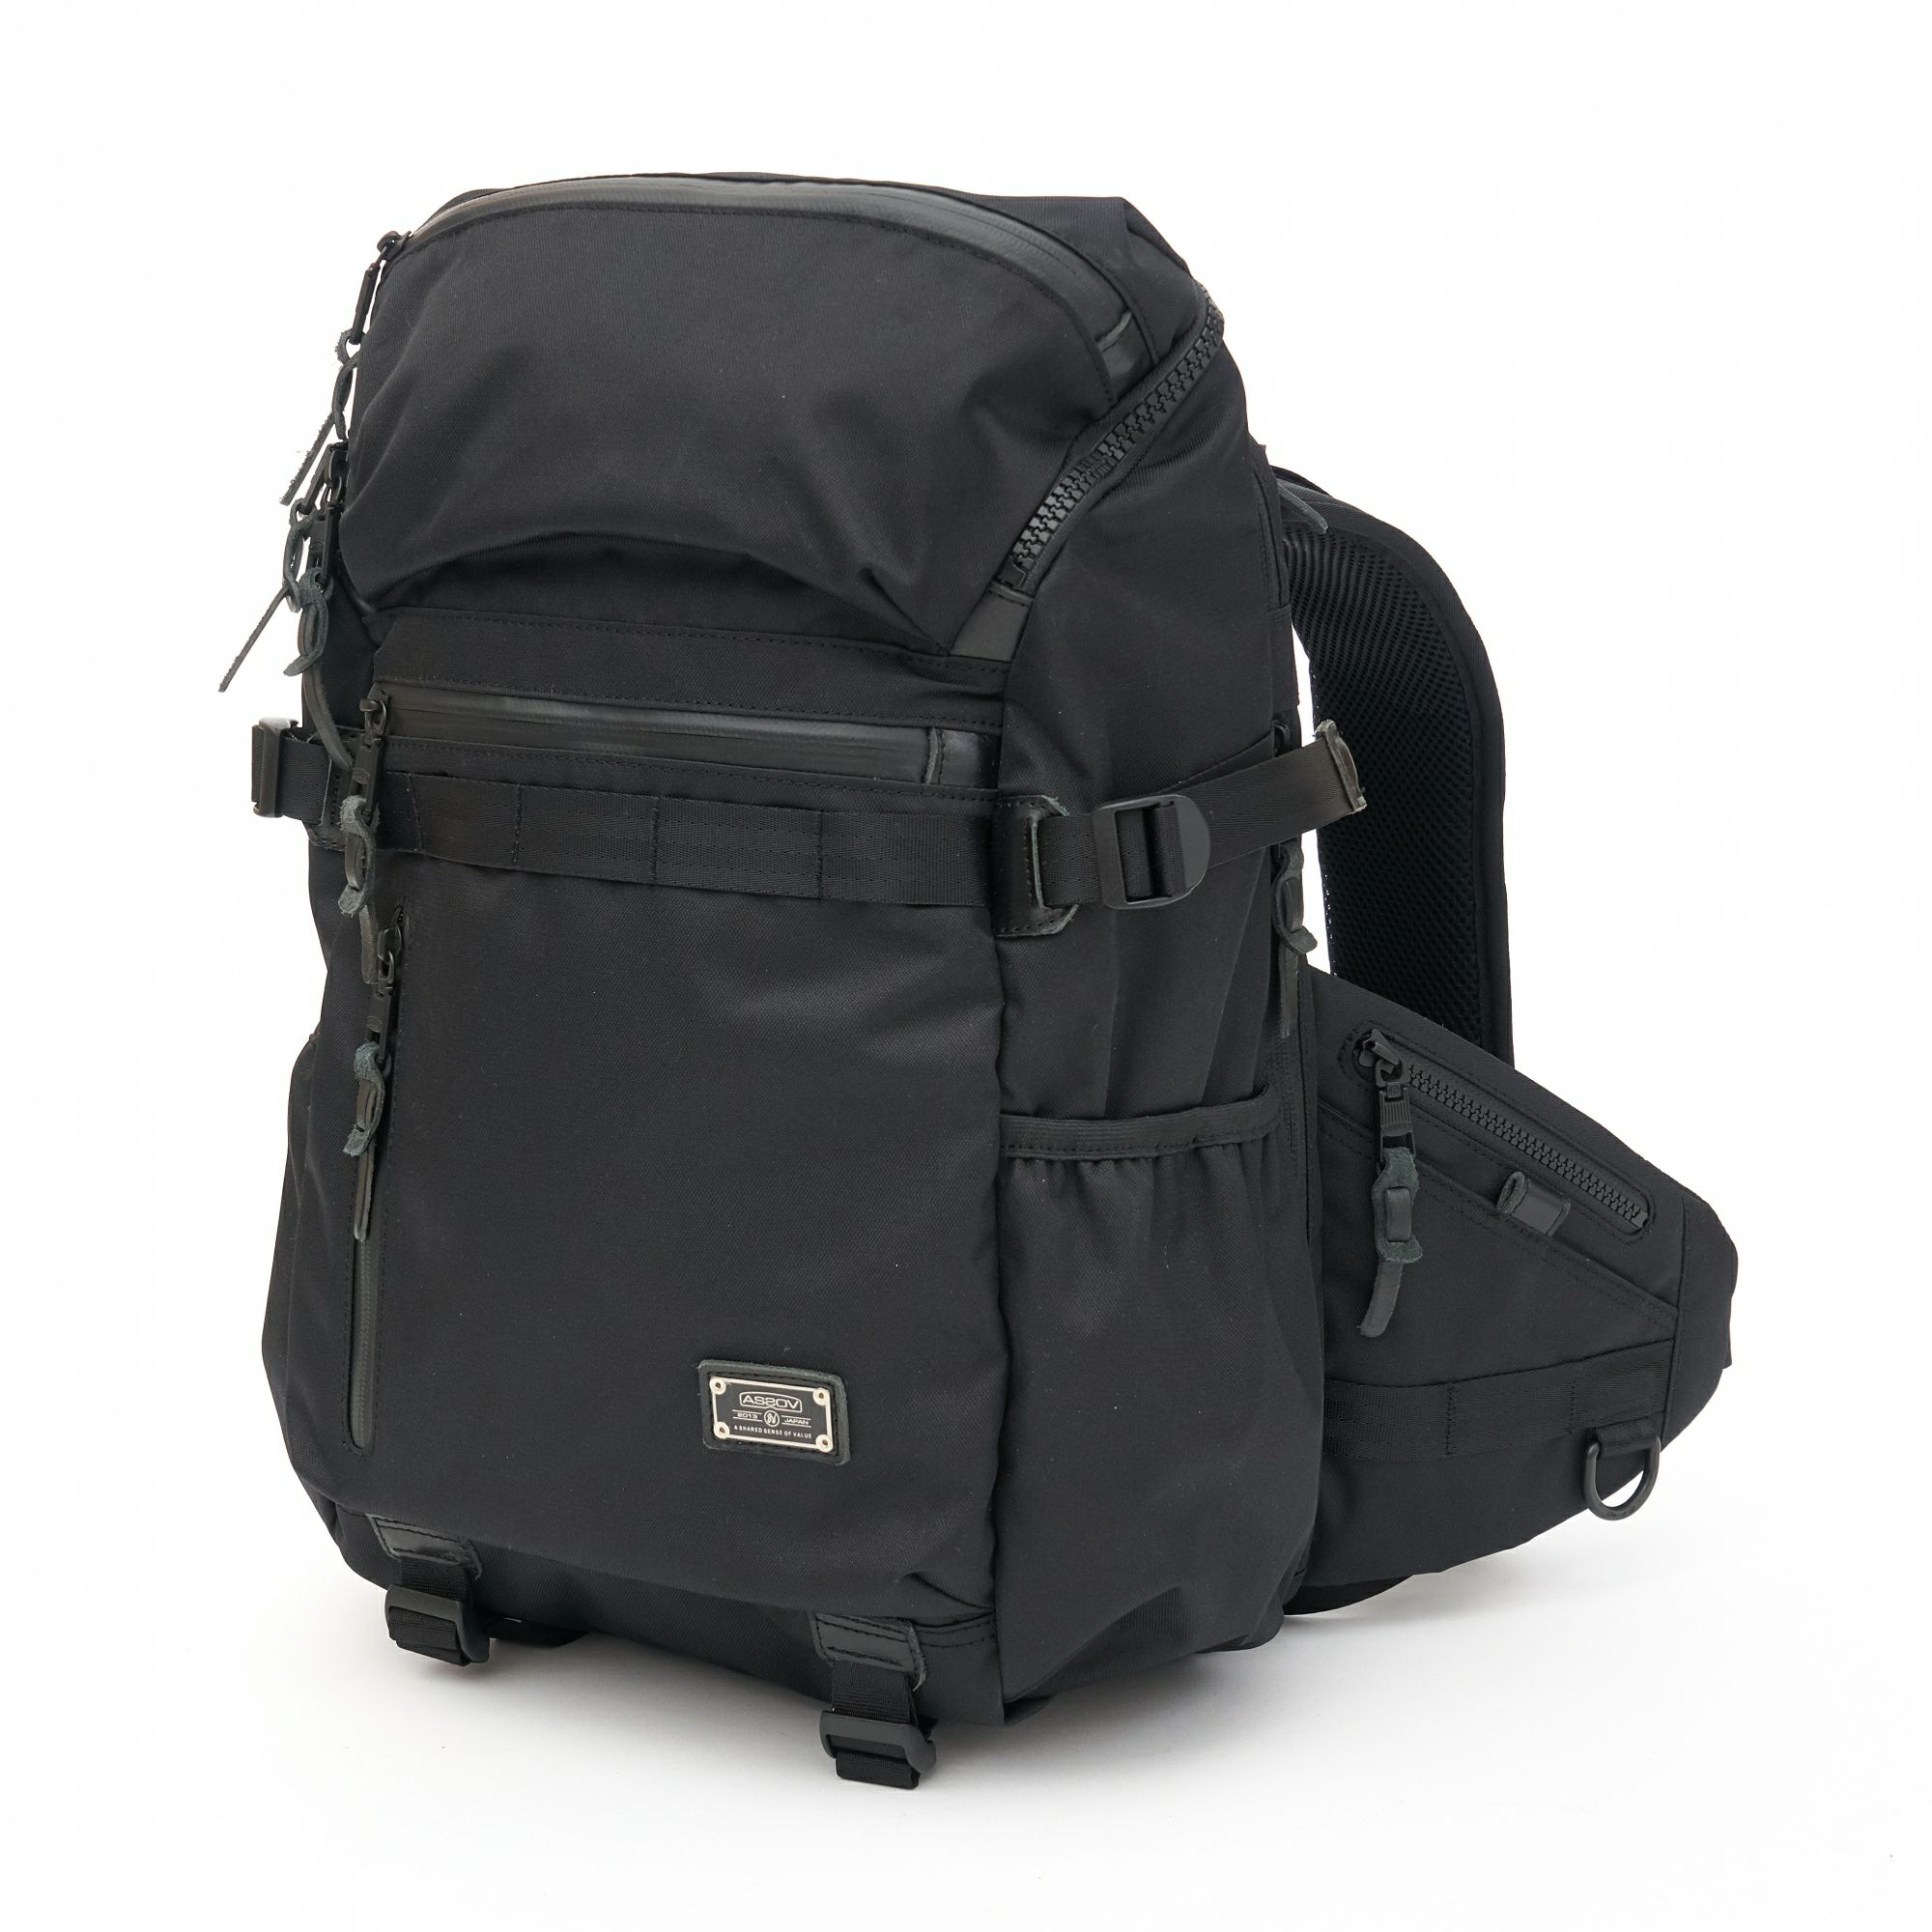 AS2OV (アッソブ) CORDURA DOBBY 305D ROUND ZIP BACK PACK BLACK Sサイズ / バックパック |  バッグ・ファッション| バッグ・アウトドア・キャンプ用品のUNBY ONLINE STORE